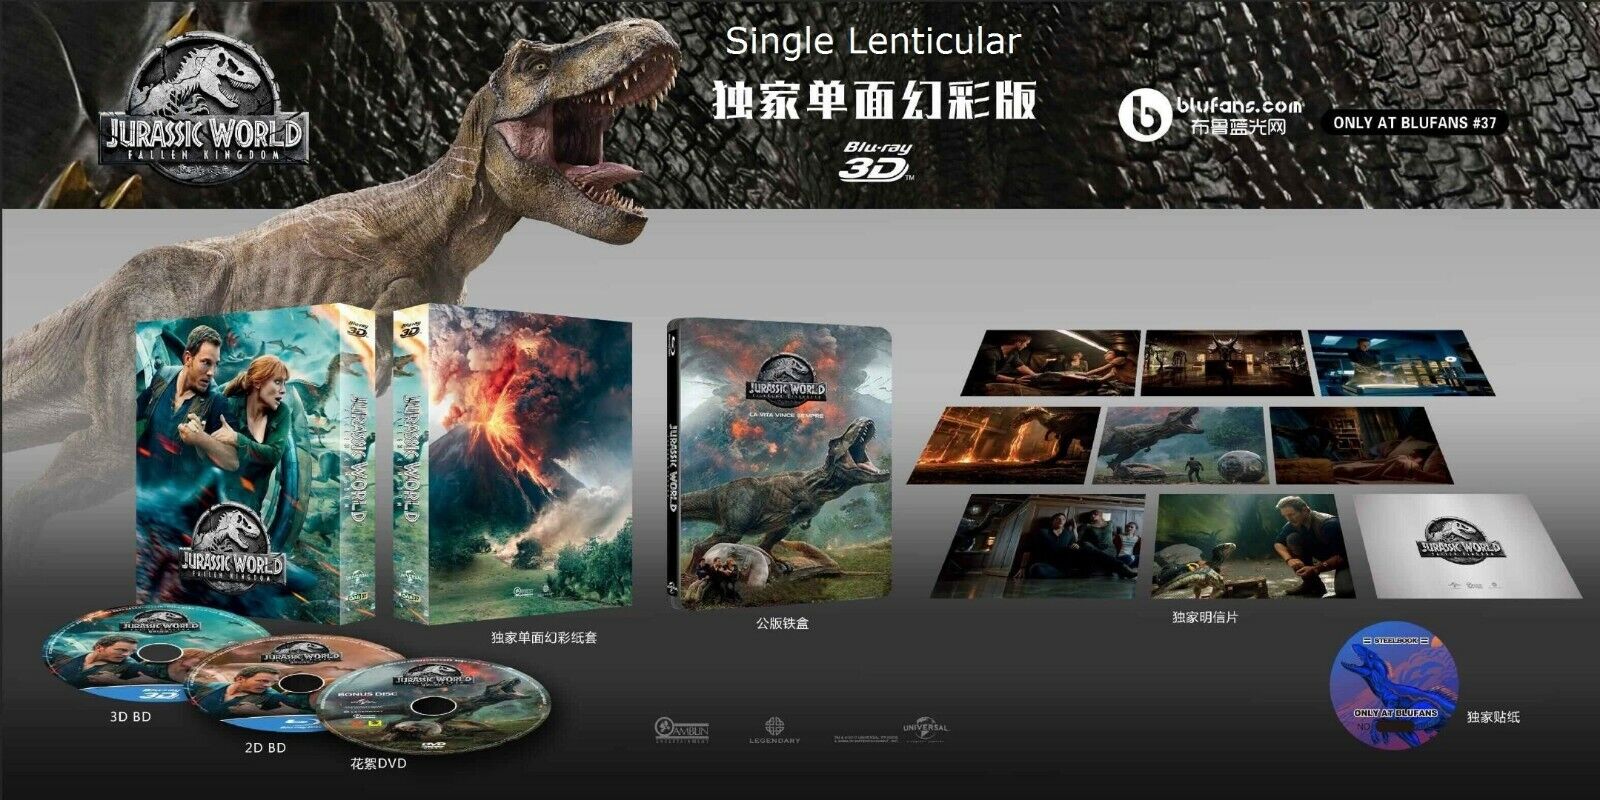 Jurassic World - Fallen Kingdom (hmv Exclusive) 4K Ultra HD Steelbook, 4K  Ultra HD Blu-ray, Free shipping over £20